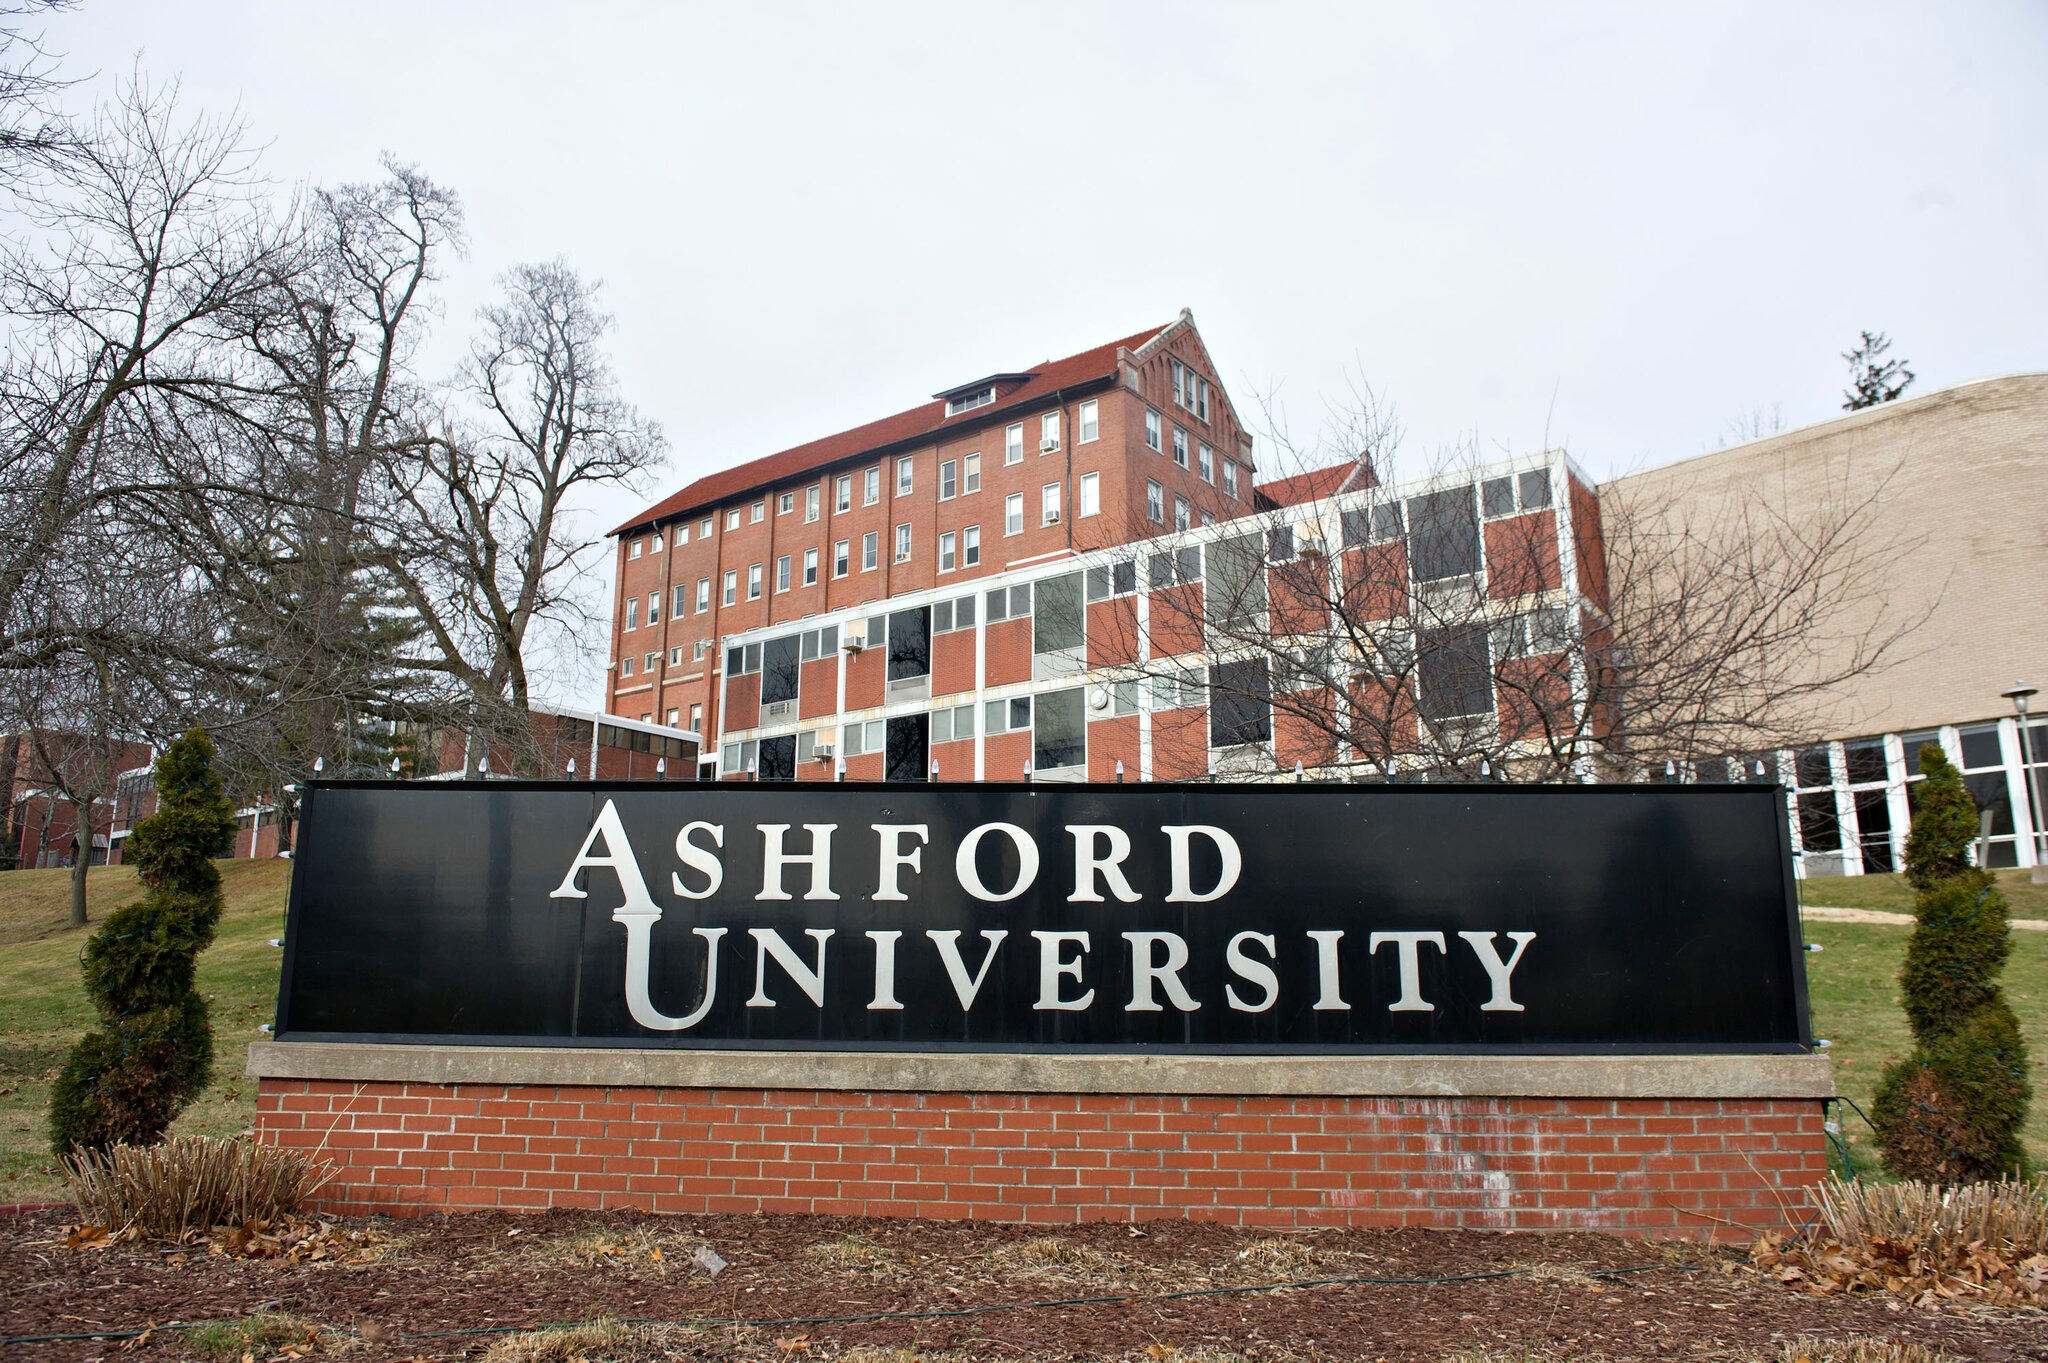 About the Ashford University